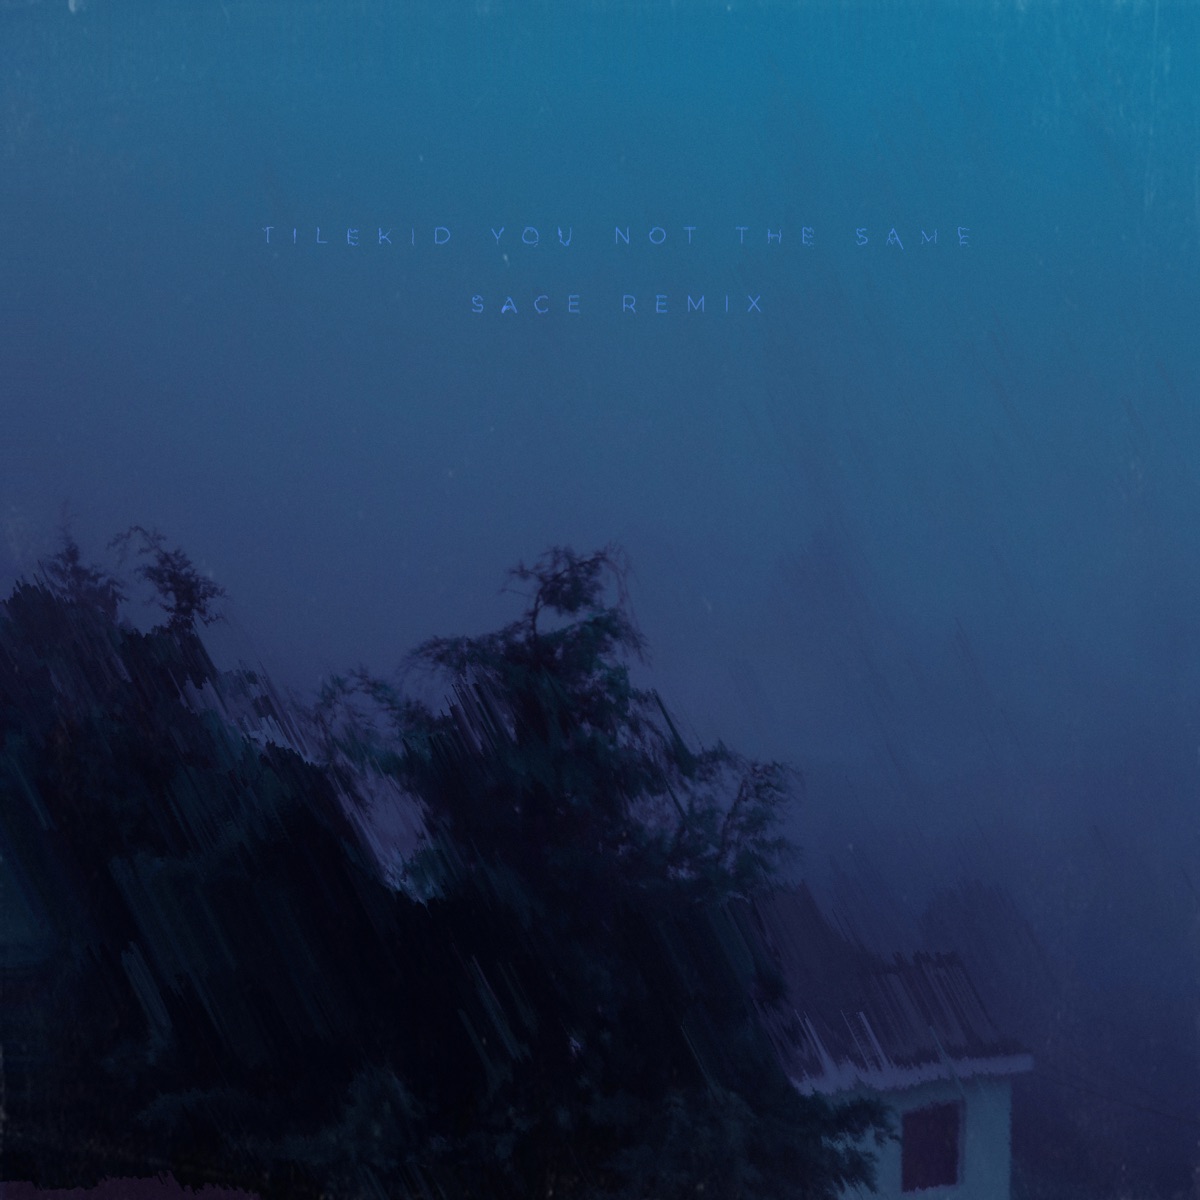 Same Old Mistakes (feat. Whitesand) - Single - Album by Kaush - Apple Music